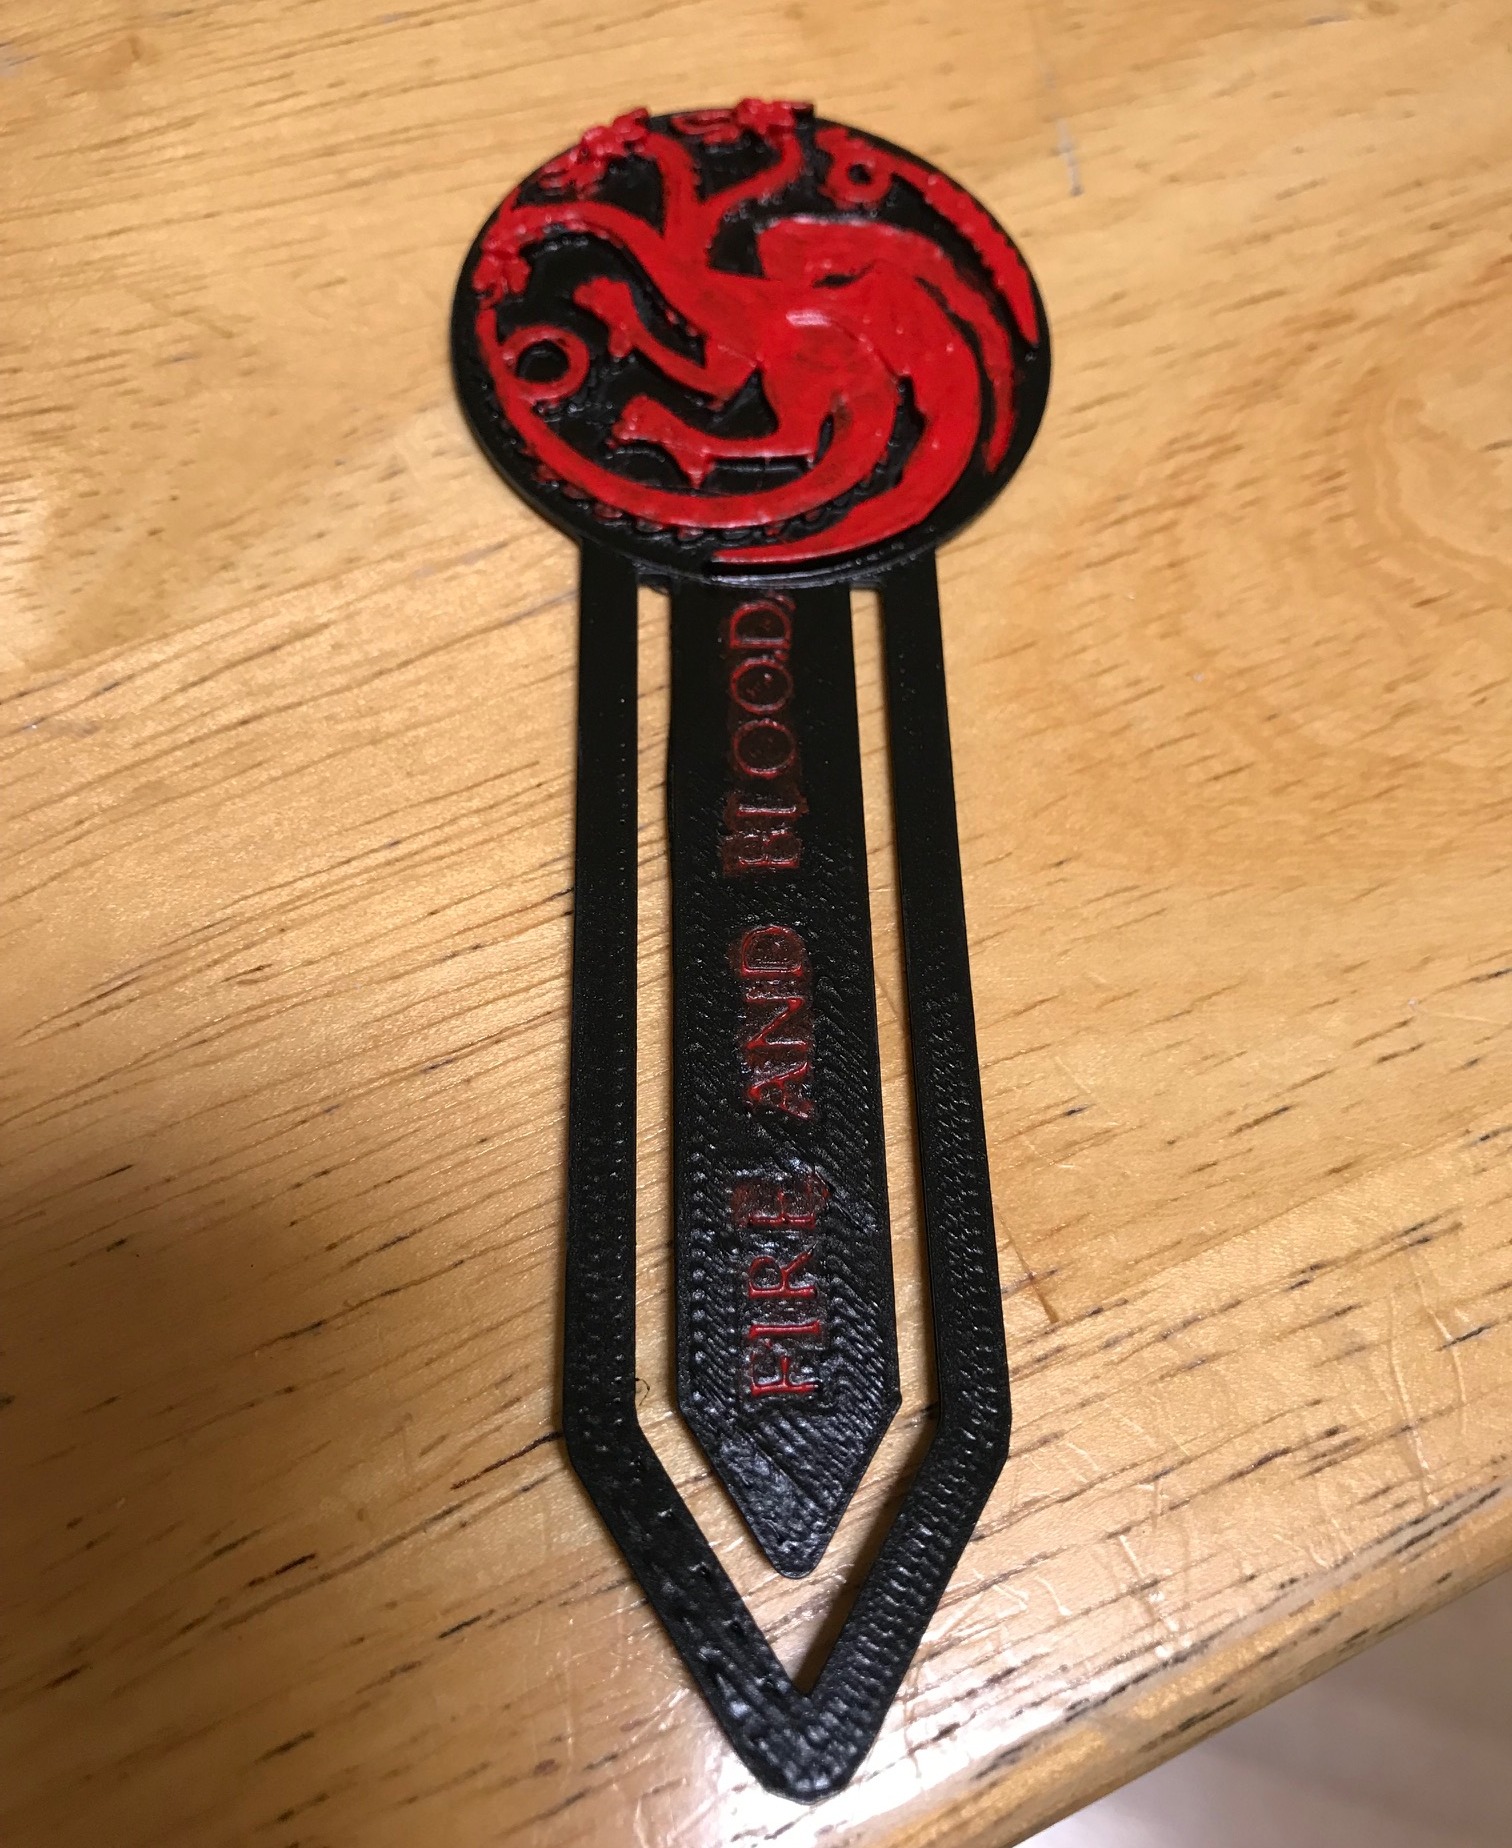 Targaryen Game of Thrones crest bookmark